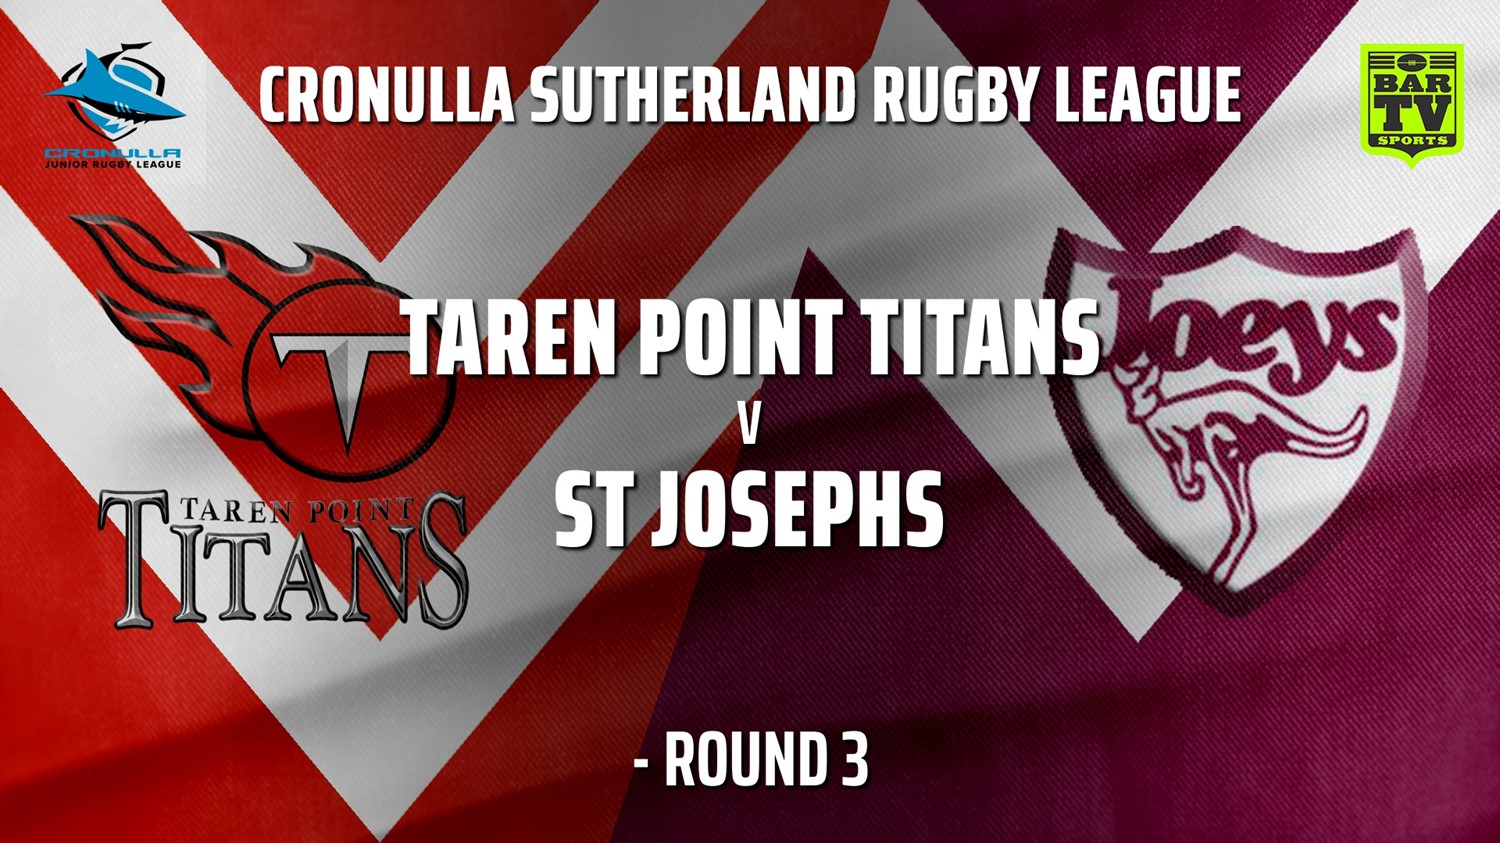 210516-Cronulla JRL - Southern Under 15s Silver - Round 3 - Taren Point Titans v St Josephs Minigame Slate Image